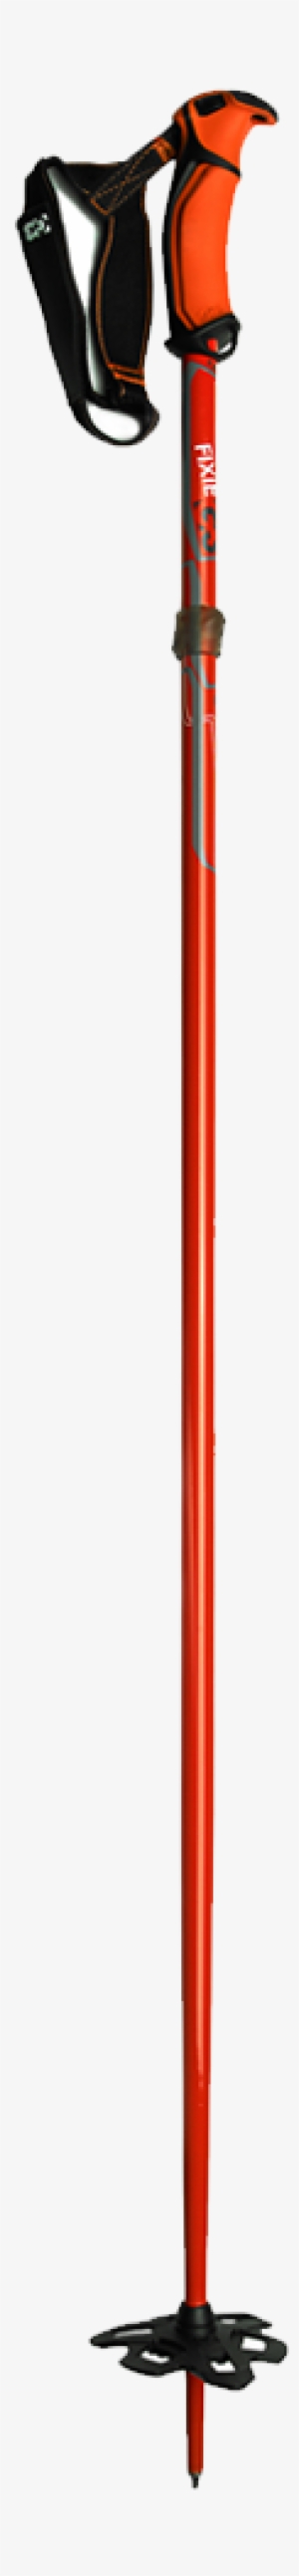 G3 Fixie 7075 Aluminum Ski Pole One Color, 135cm